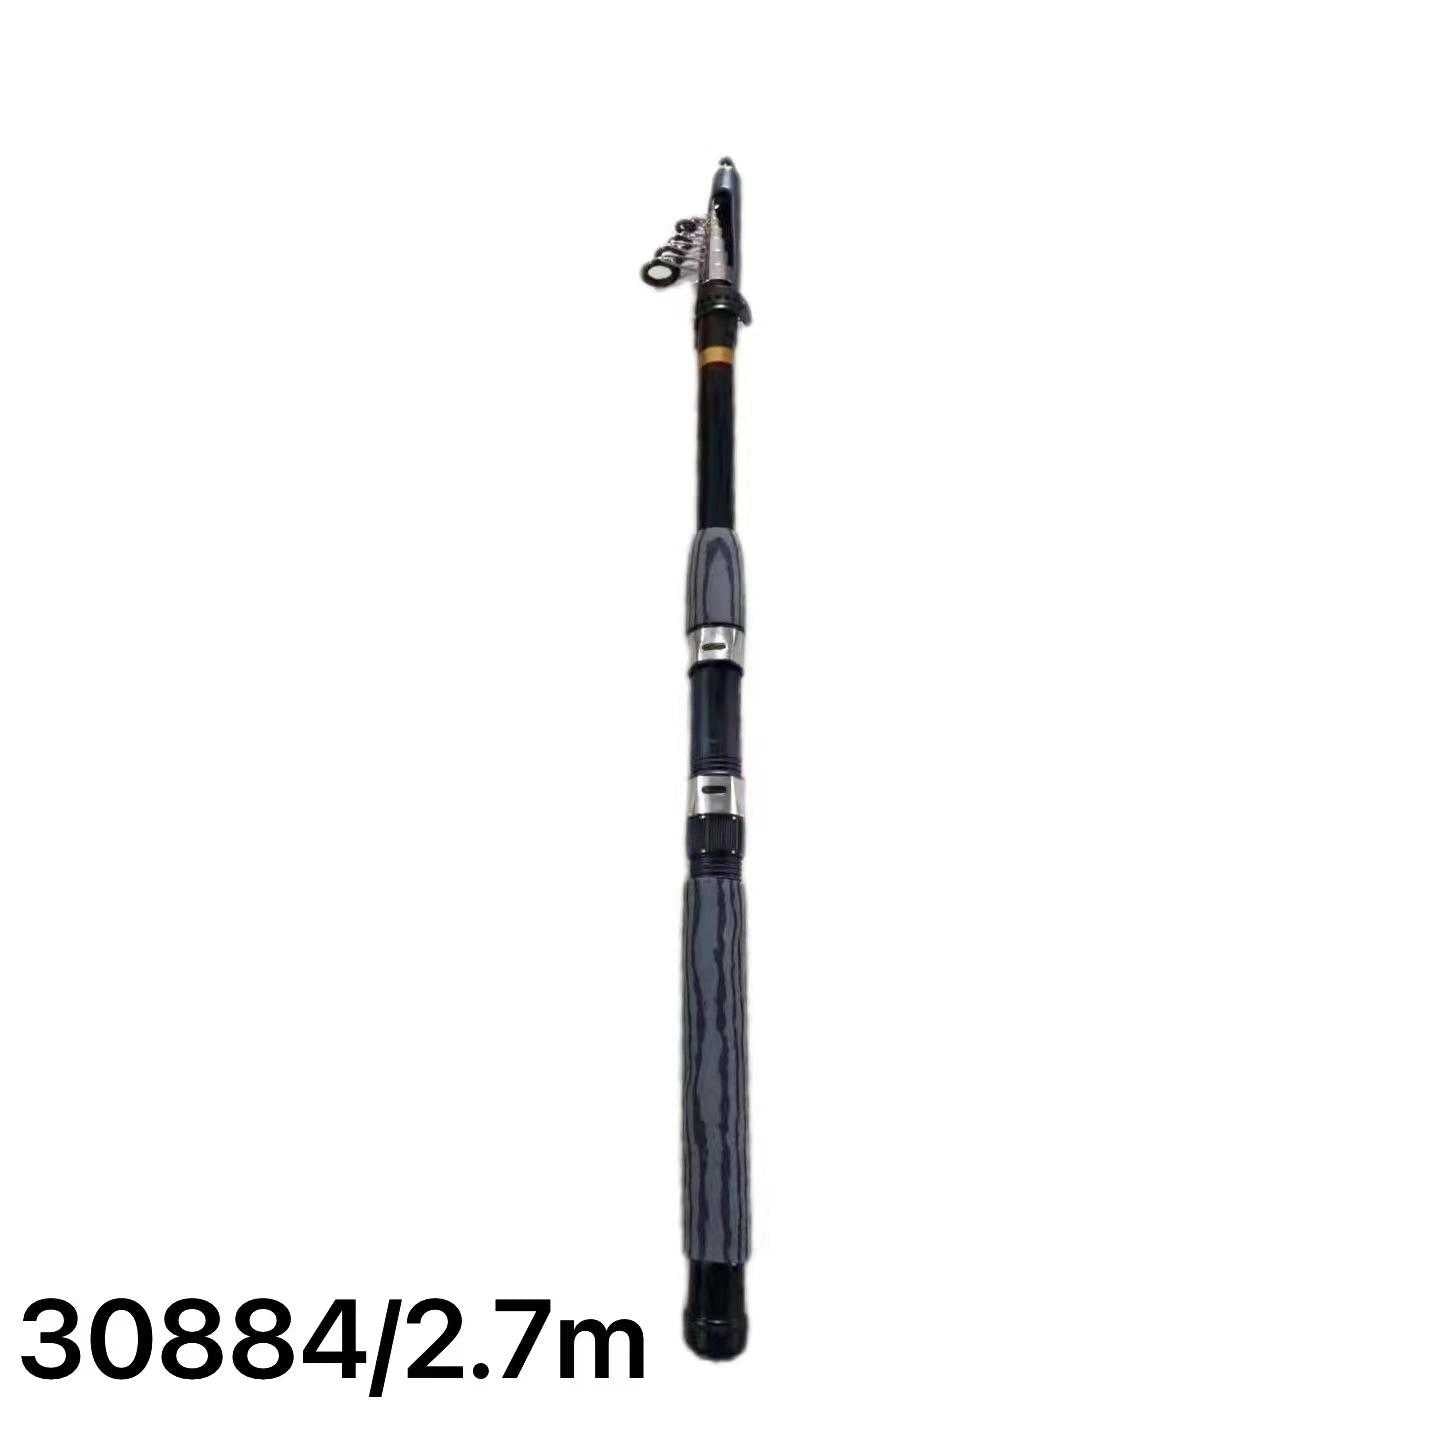 Fishing rod - Telescopic - 2.7m - 30884